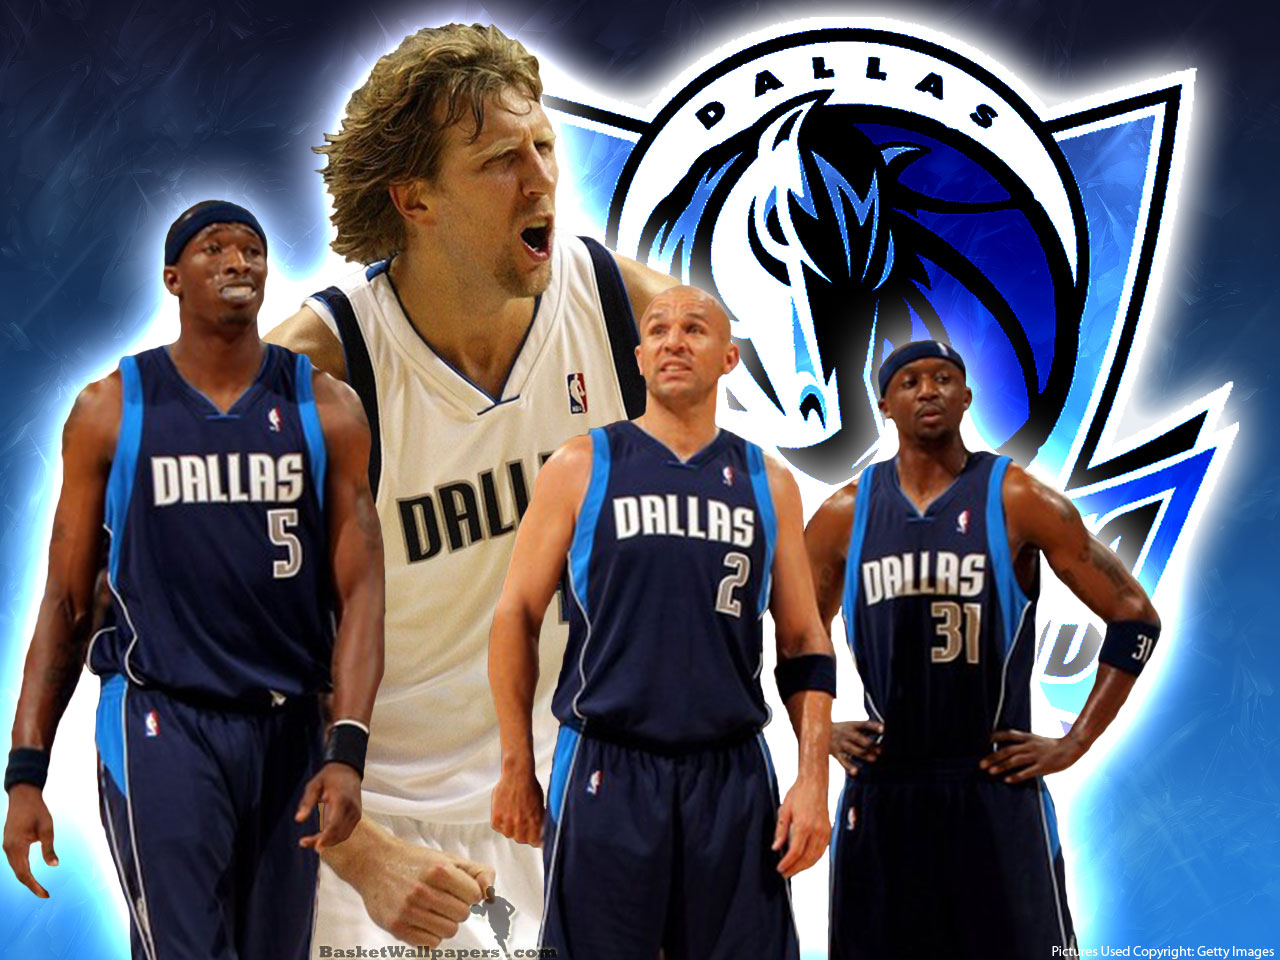 Dallas Mavericks Wallpapers | Basketball Wallpapers at BasketWallpapers.com